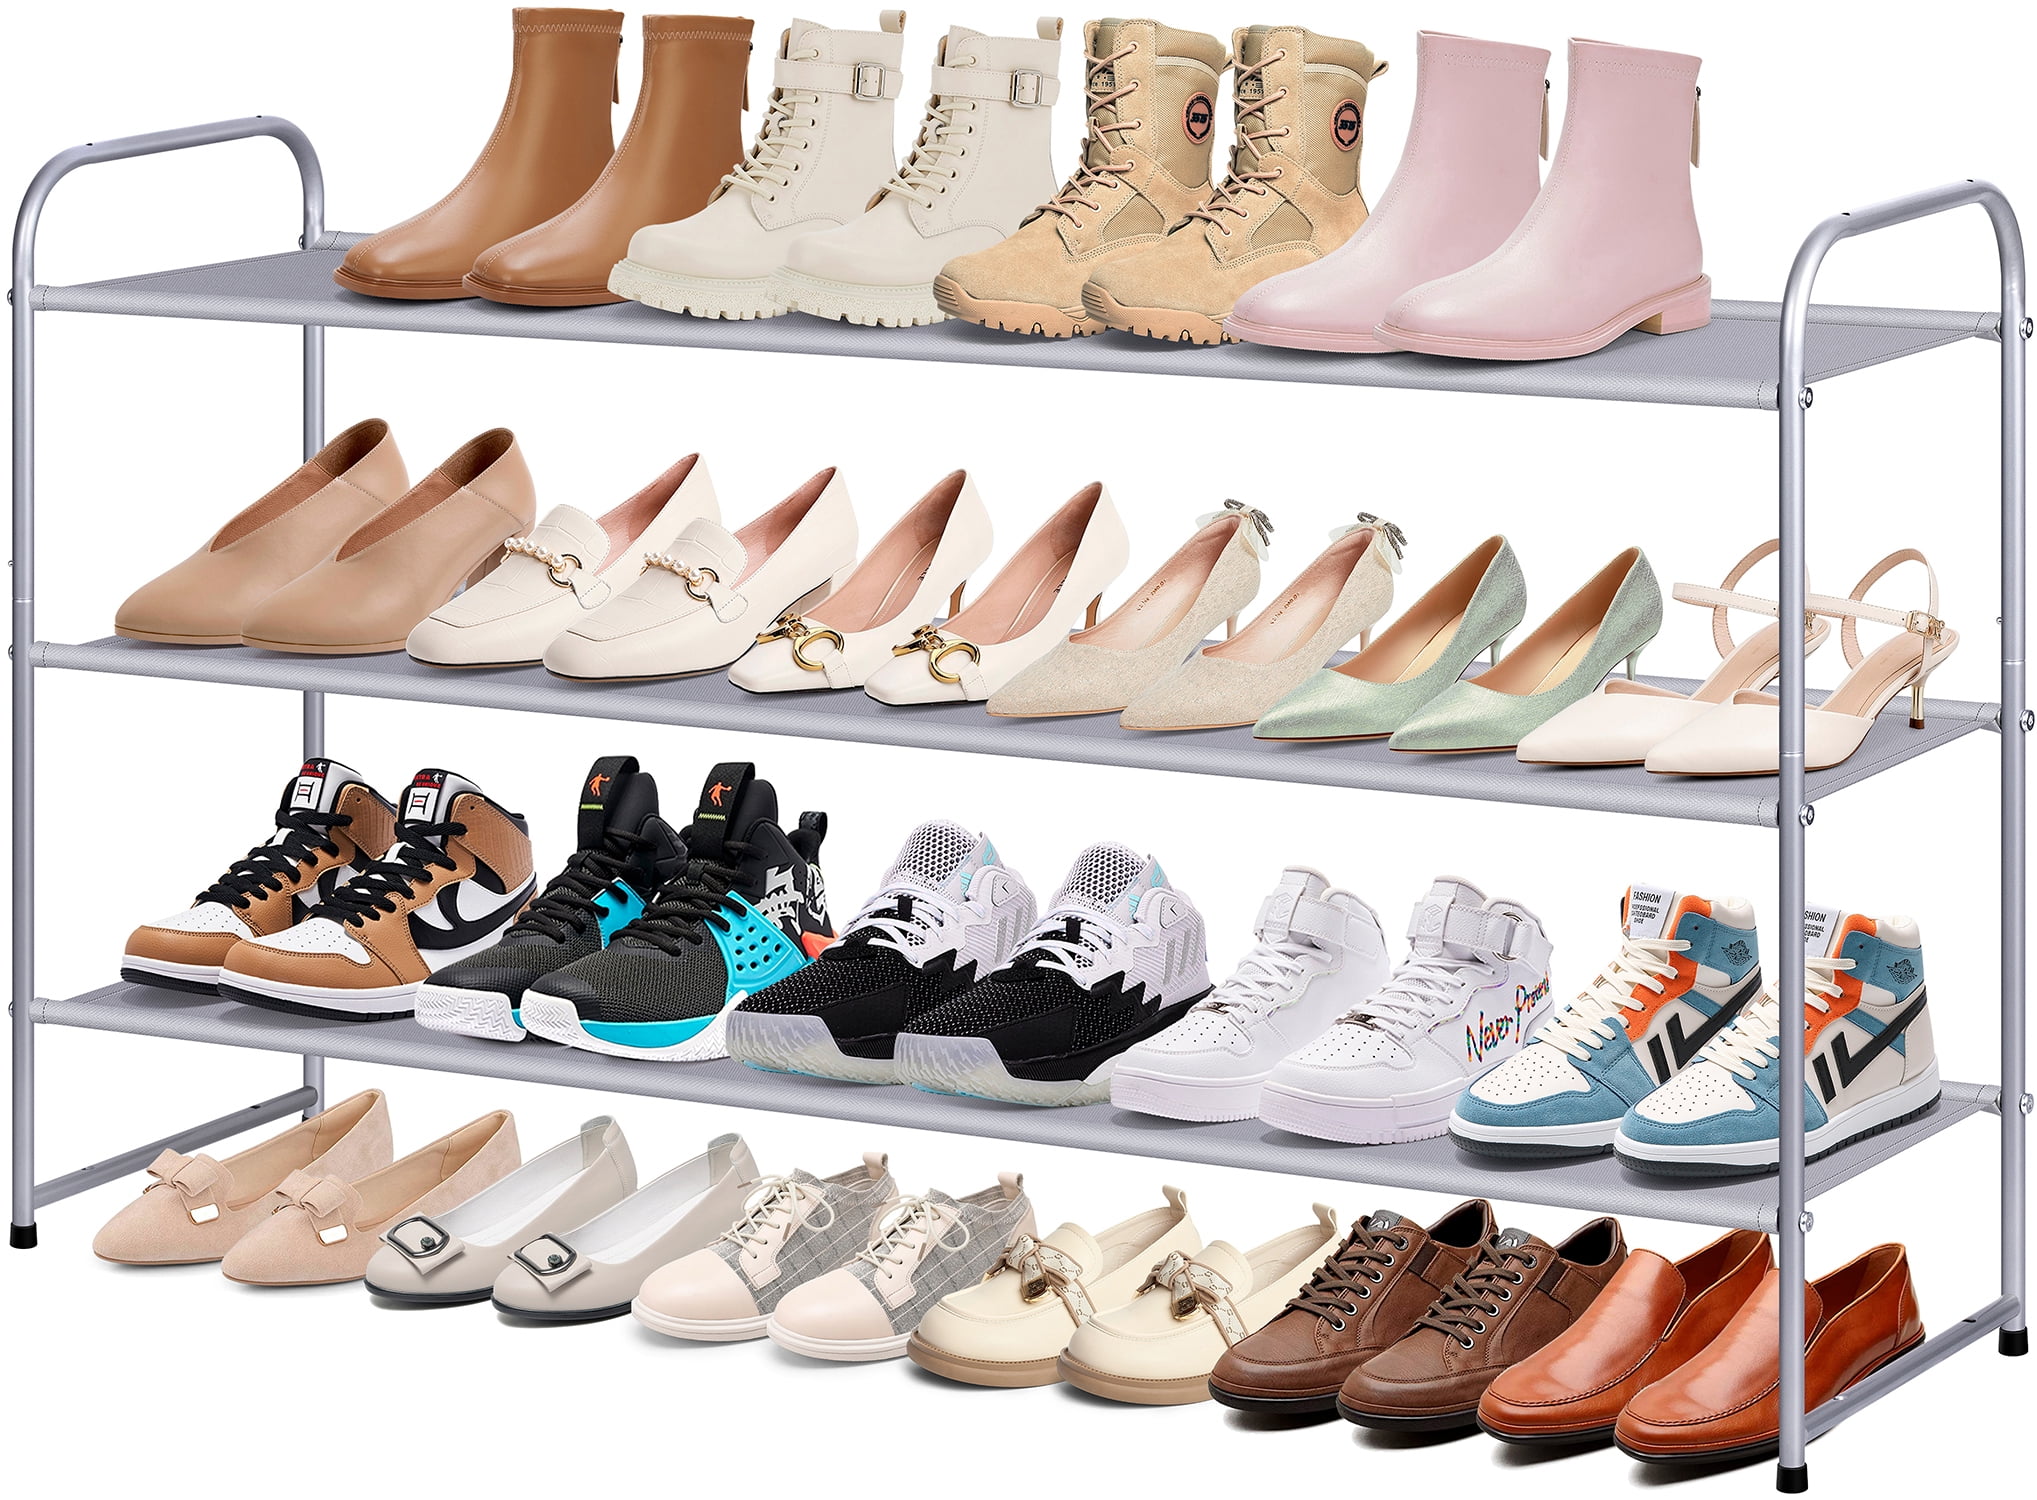 Shoe Rack-3 Levels / With Length Options, Shoe Storage, Shoe